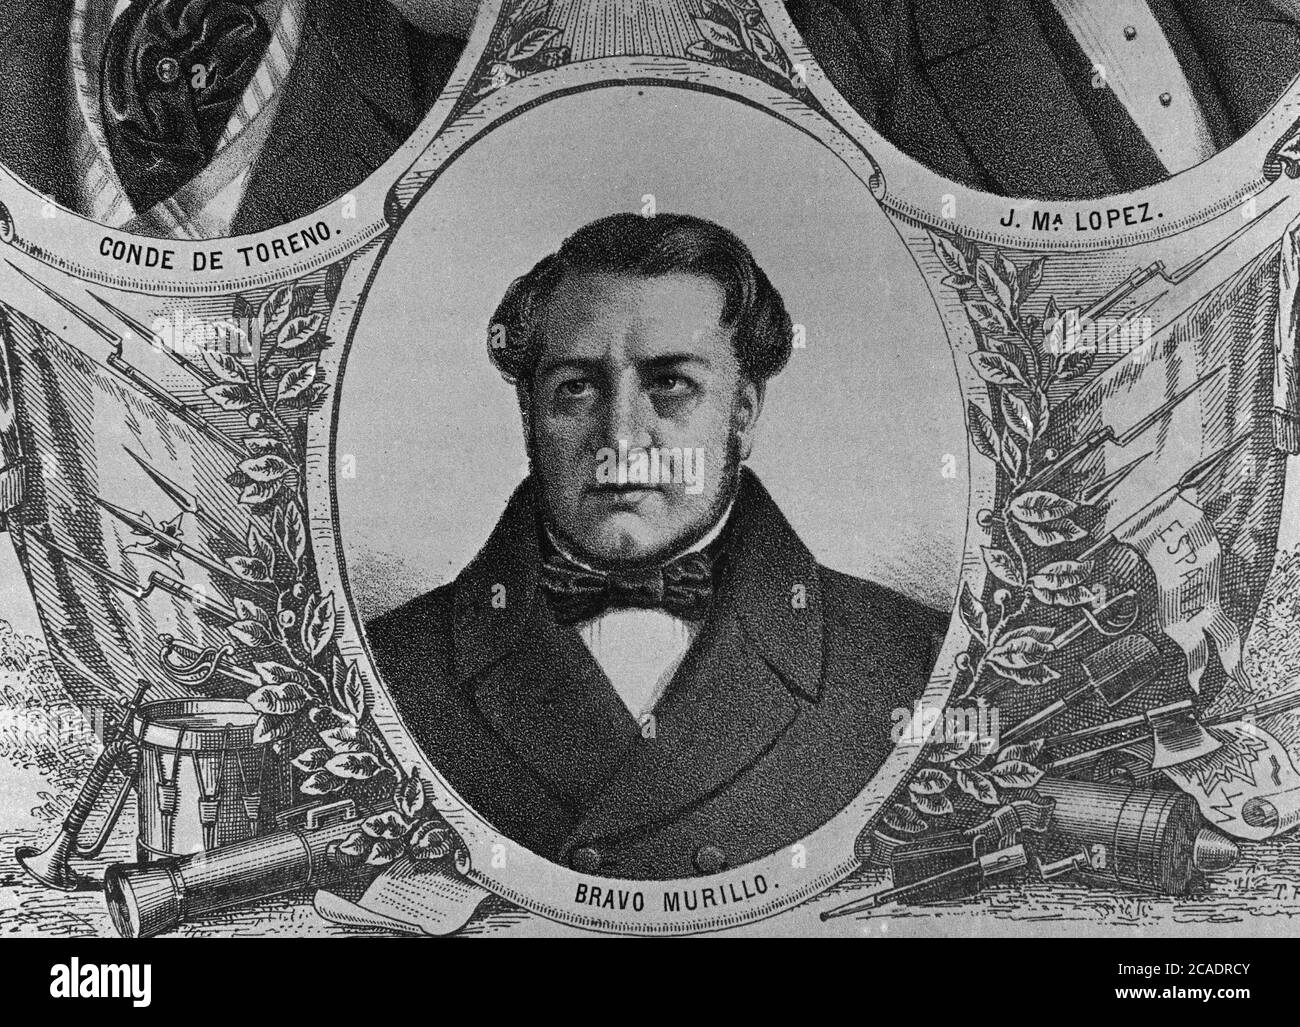 DON JUAN BRAVO MURILLO (1803/1873) - MINISTRO DE HACIENDA Y PRESIDENTE DEL CONSEJO DE MINISTROS. Stockfoto